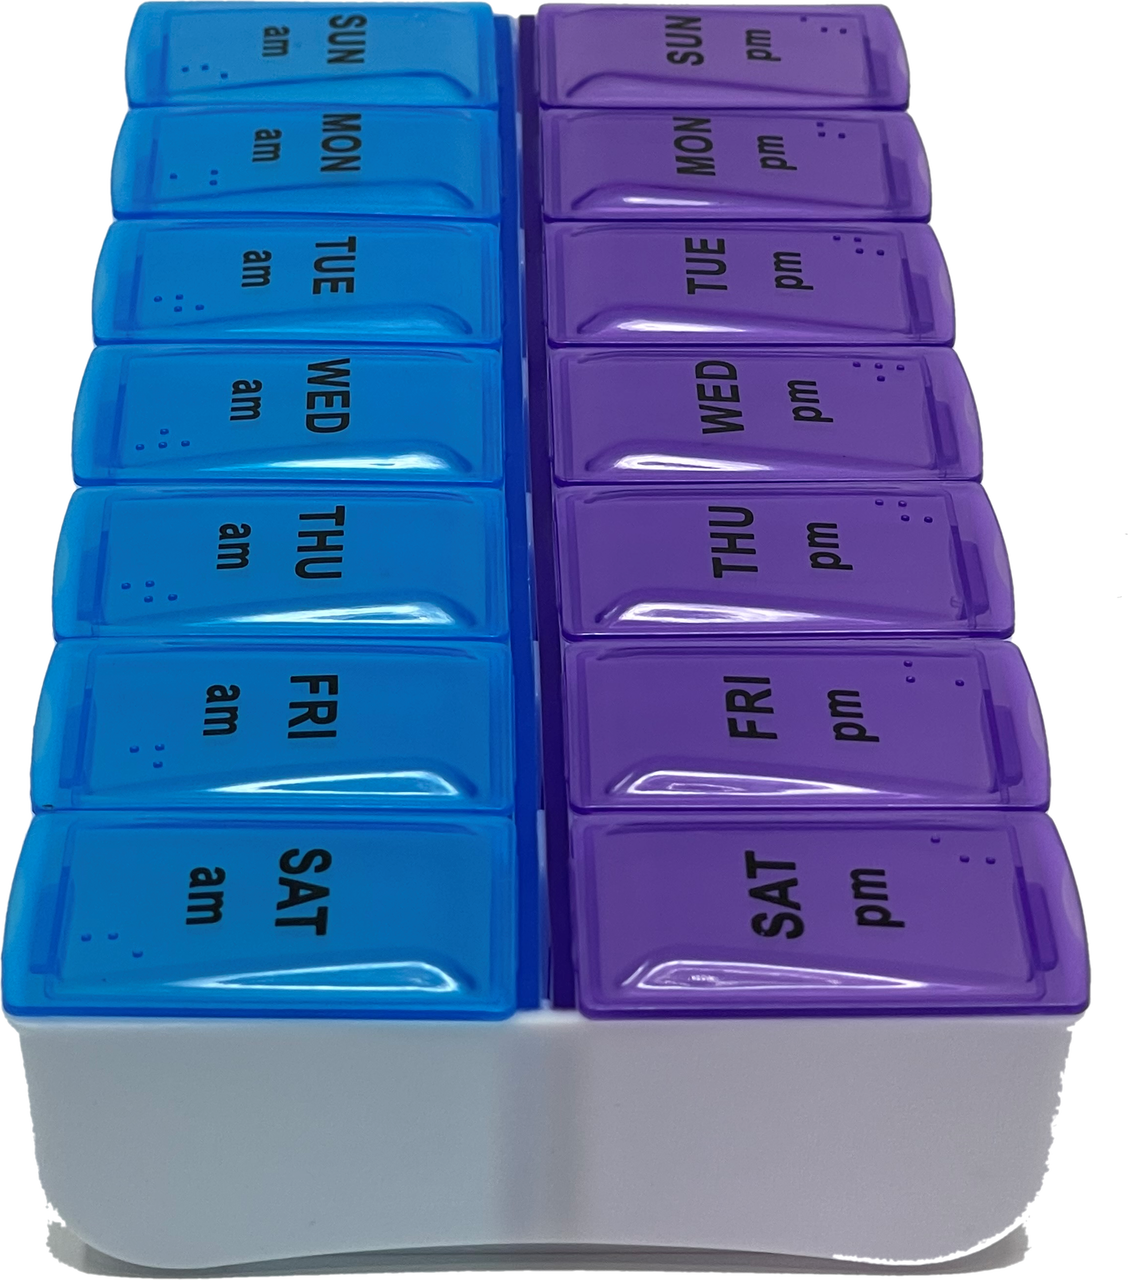 24/7 MEDICASE Danish Design Pill Box for 7 Days - Small/Medium Size Day Dispense